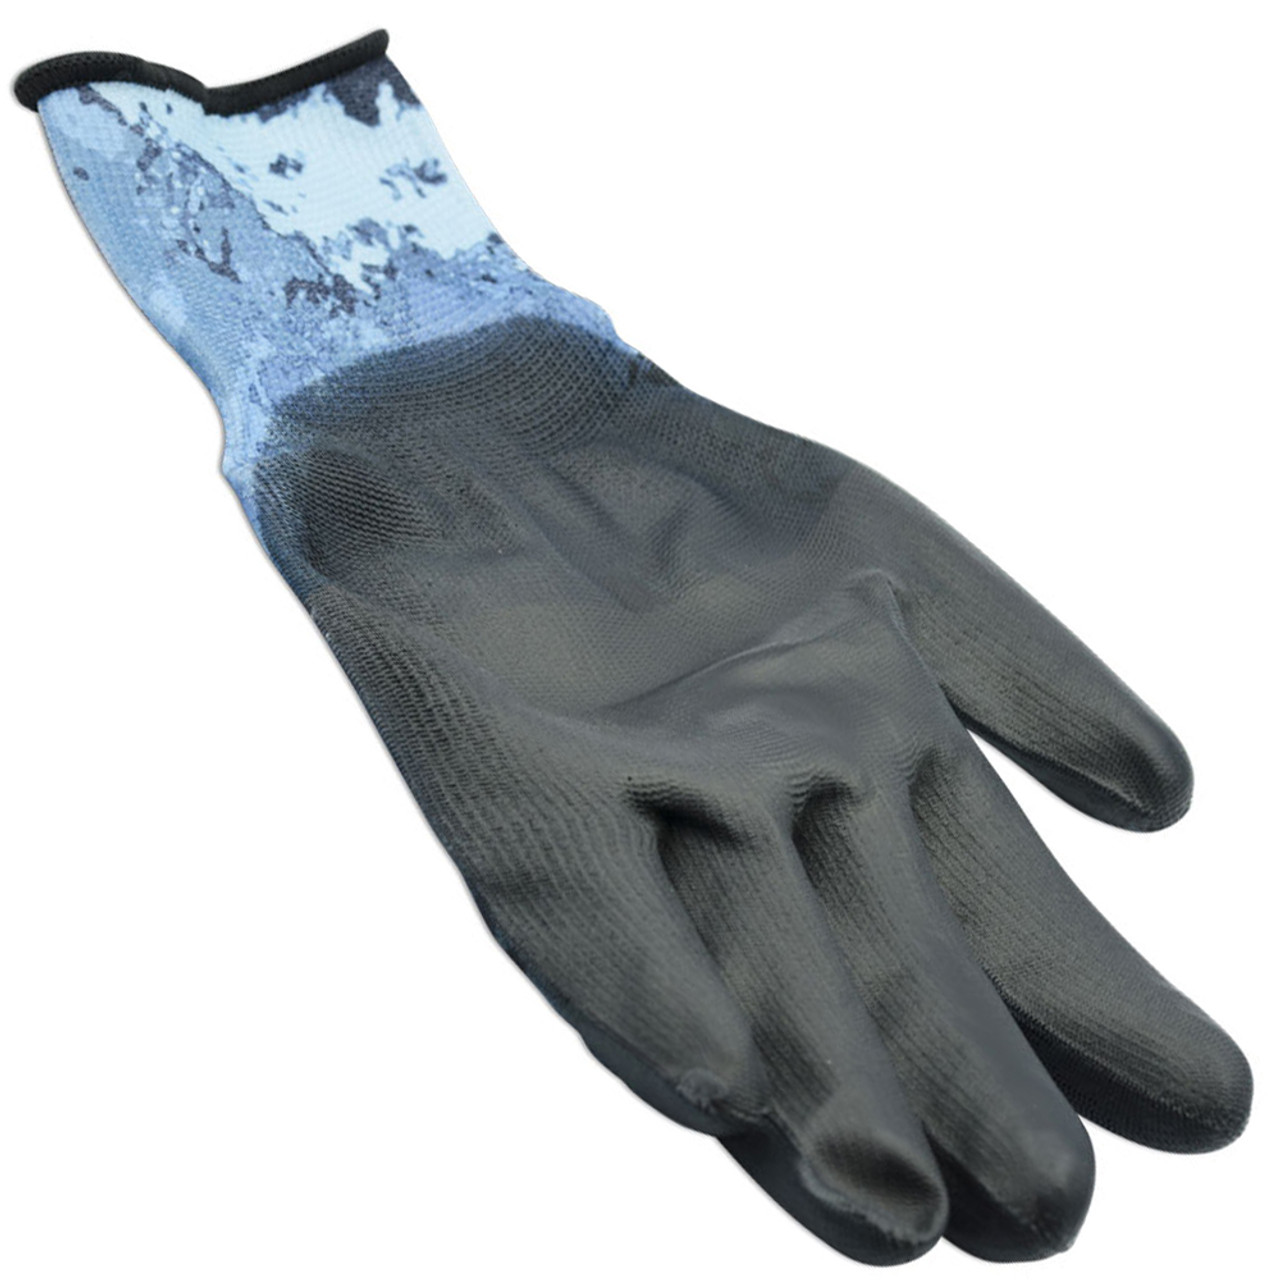 https://cdn11.bigcommerce.com/s-55834/images/stencil/1280x1280/products/4941/17609/gorilla-grip-veil-aqueous-gloves-palm__77502.1580031728.jpg?c=2